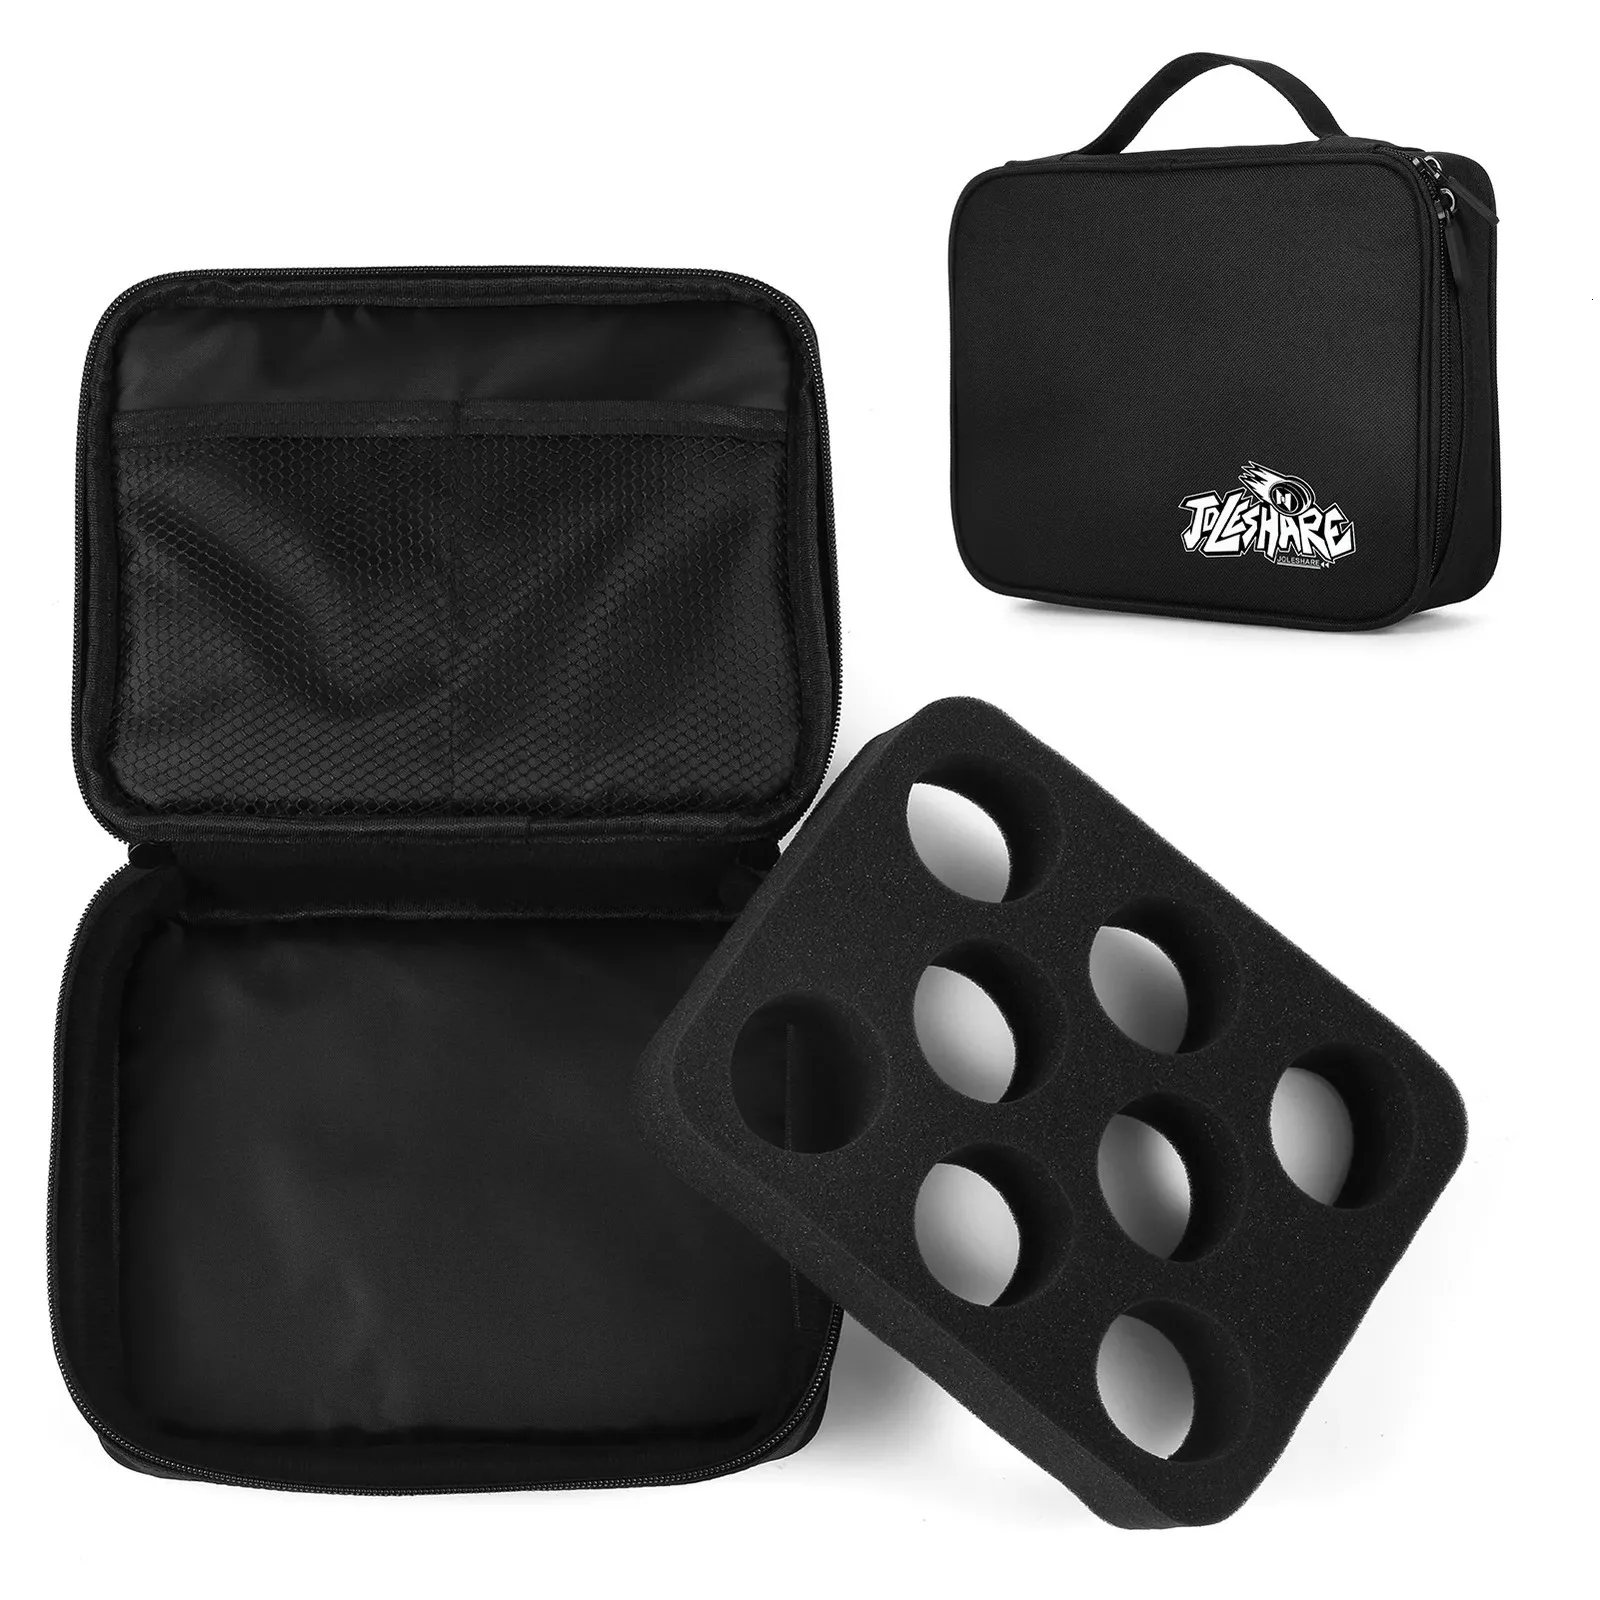 Yoyo Ball Holder Bag Vorage Bag Case-Sorbing Yo Protective Bag Case for 8 Yoyo Balls and Accessories 240416